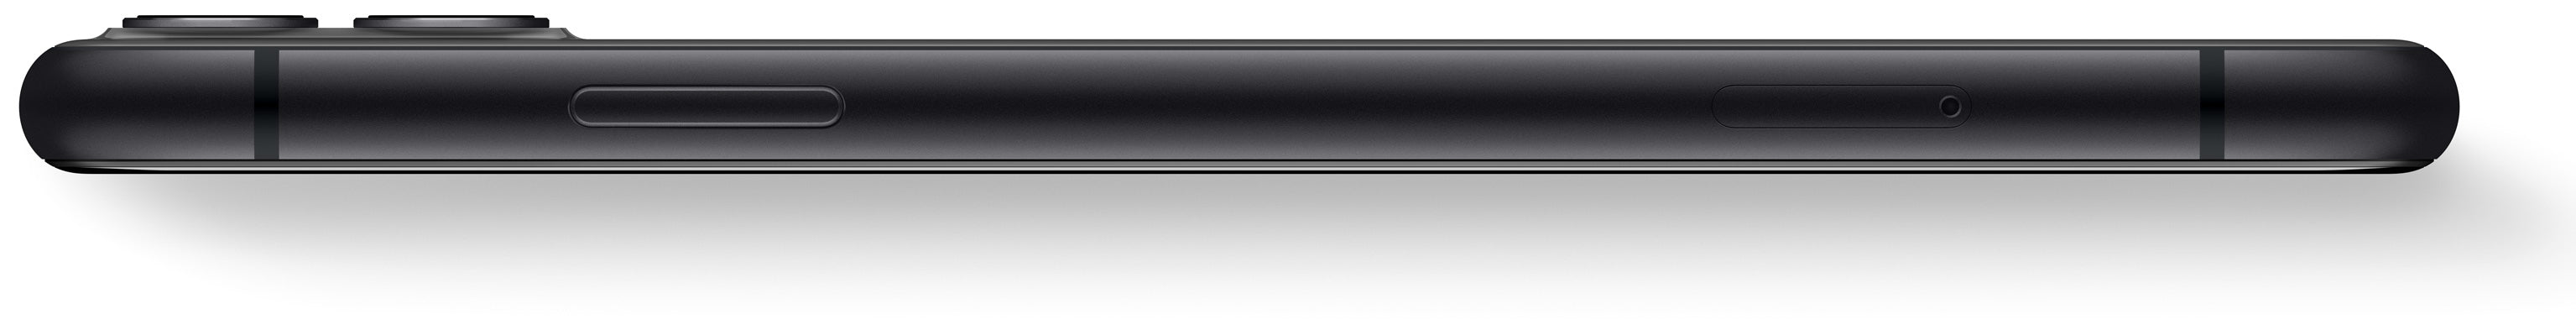 Apple iPhone 11 128gb Black - 11